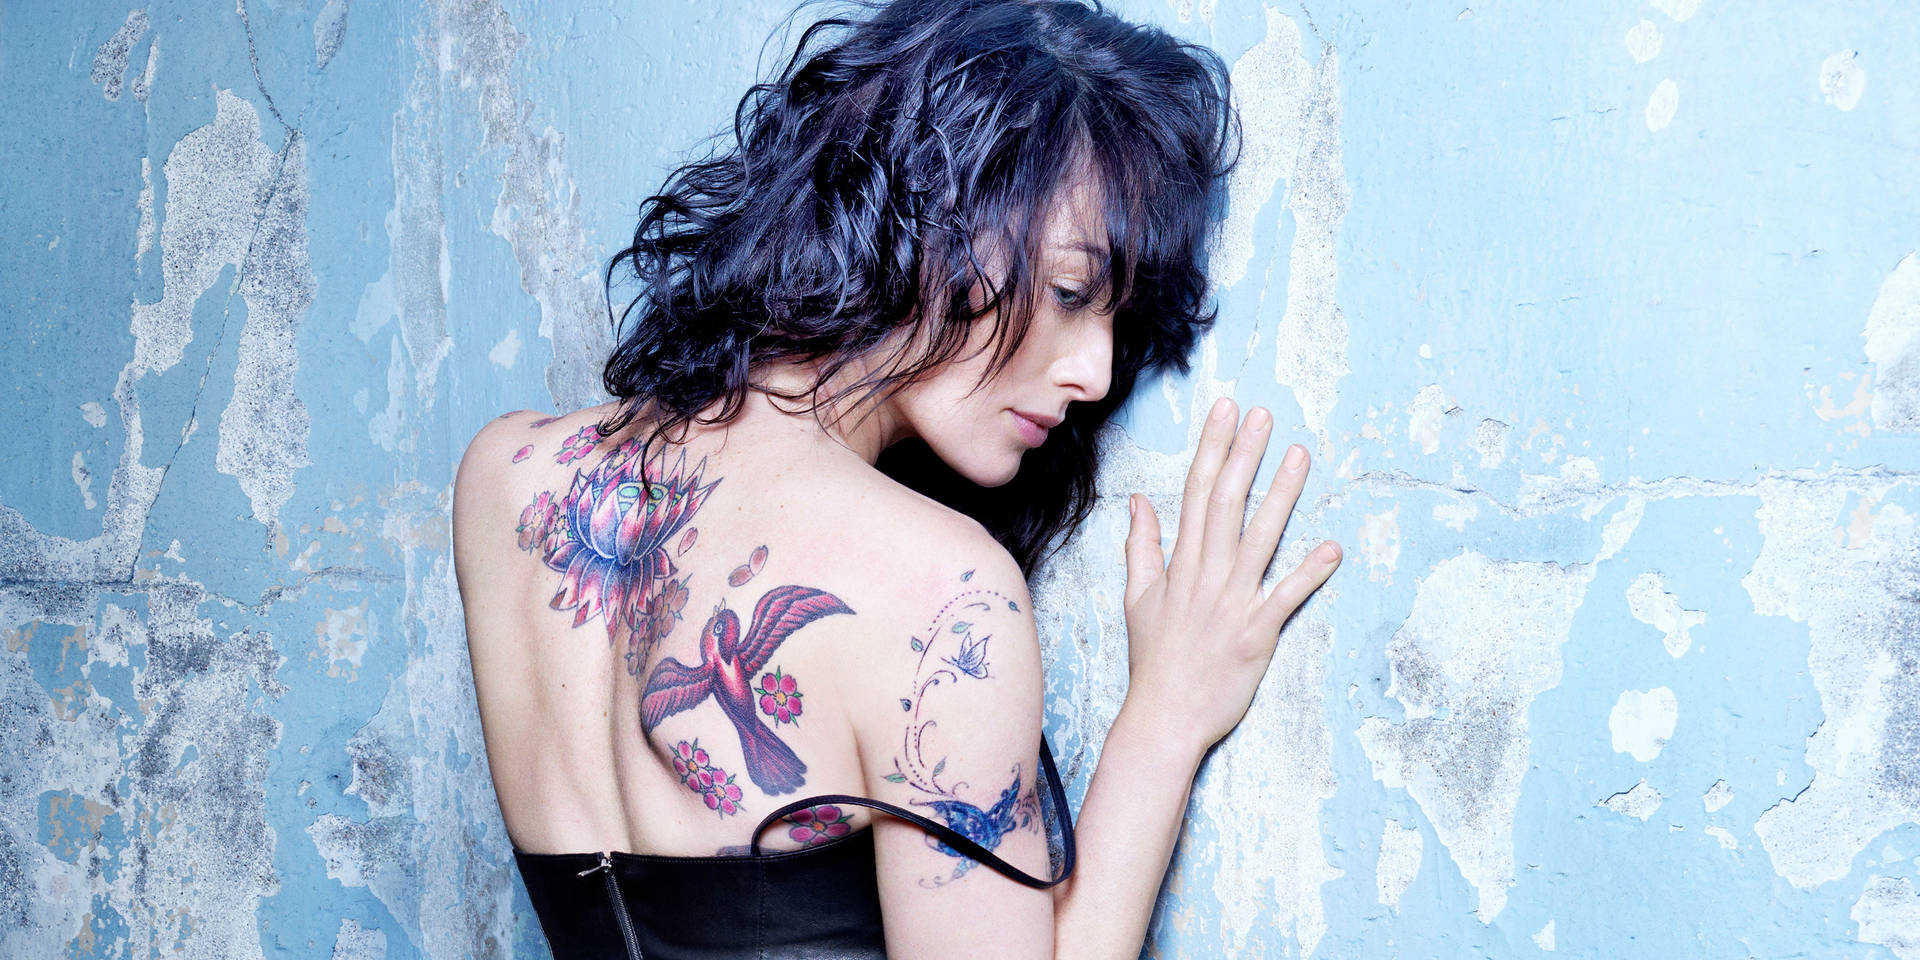 Captivating Art: An Intricate HD Tattoo on a Woman Wallpaper